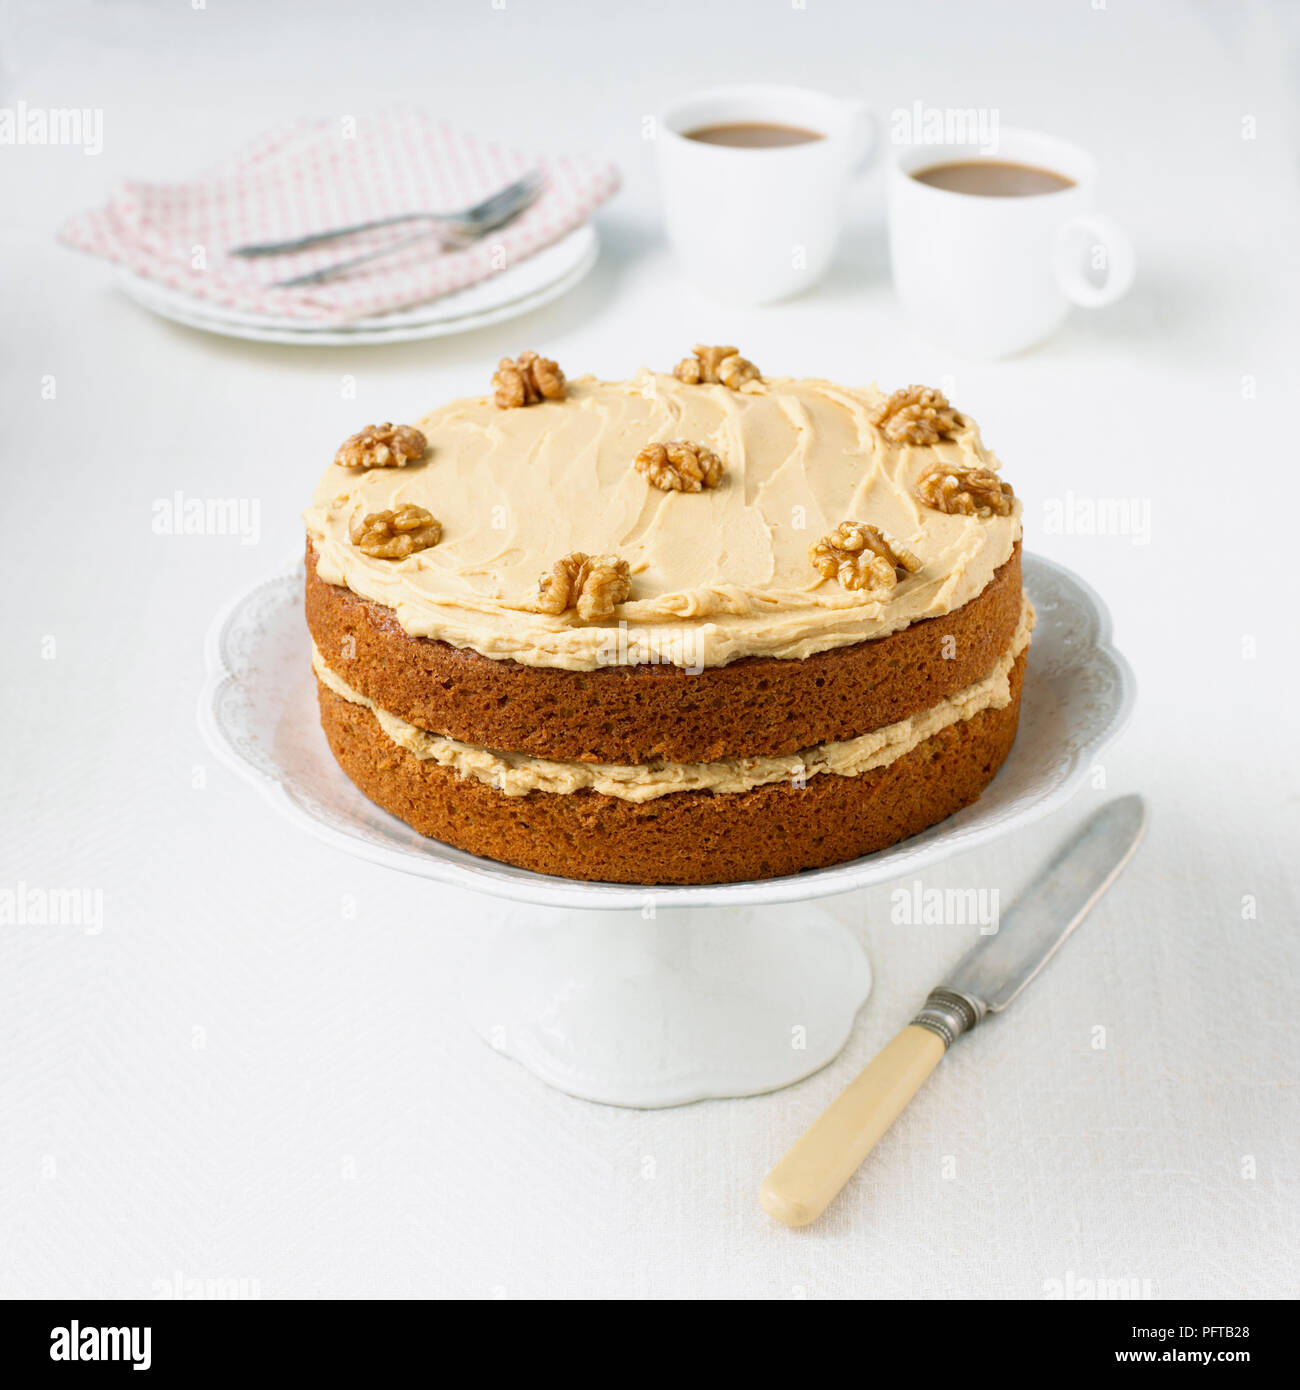 Coffee and walnut sponge cake Stock Photo